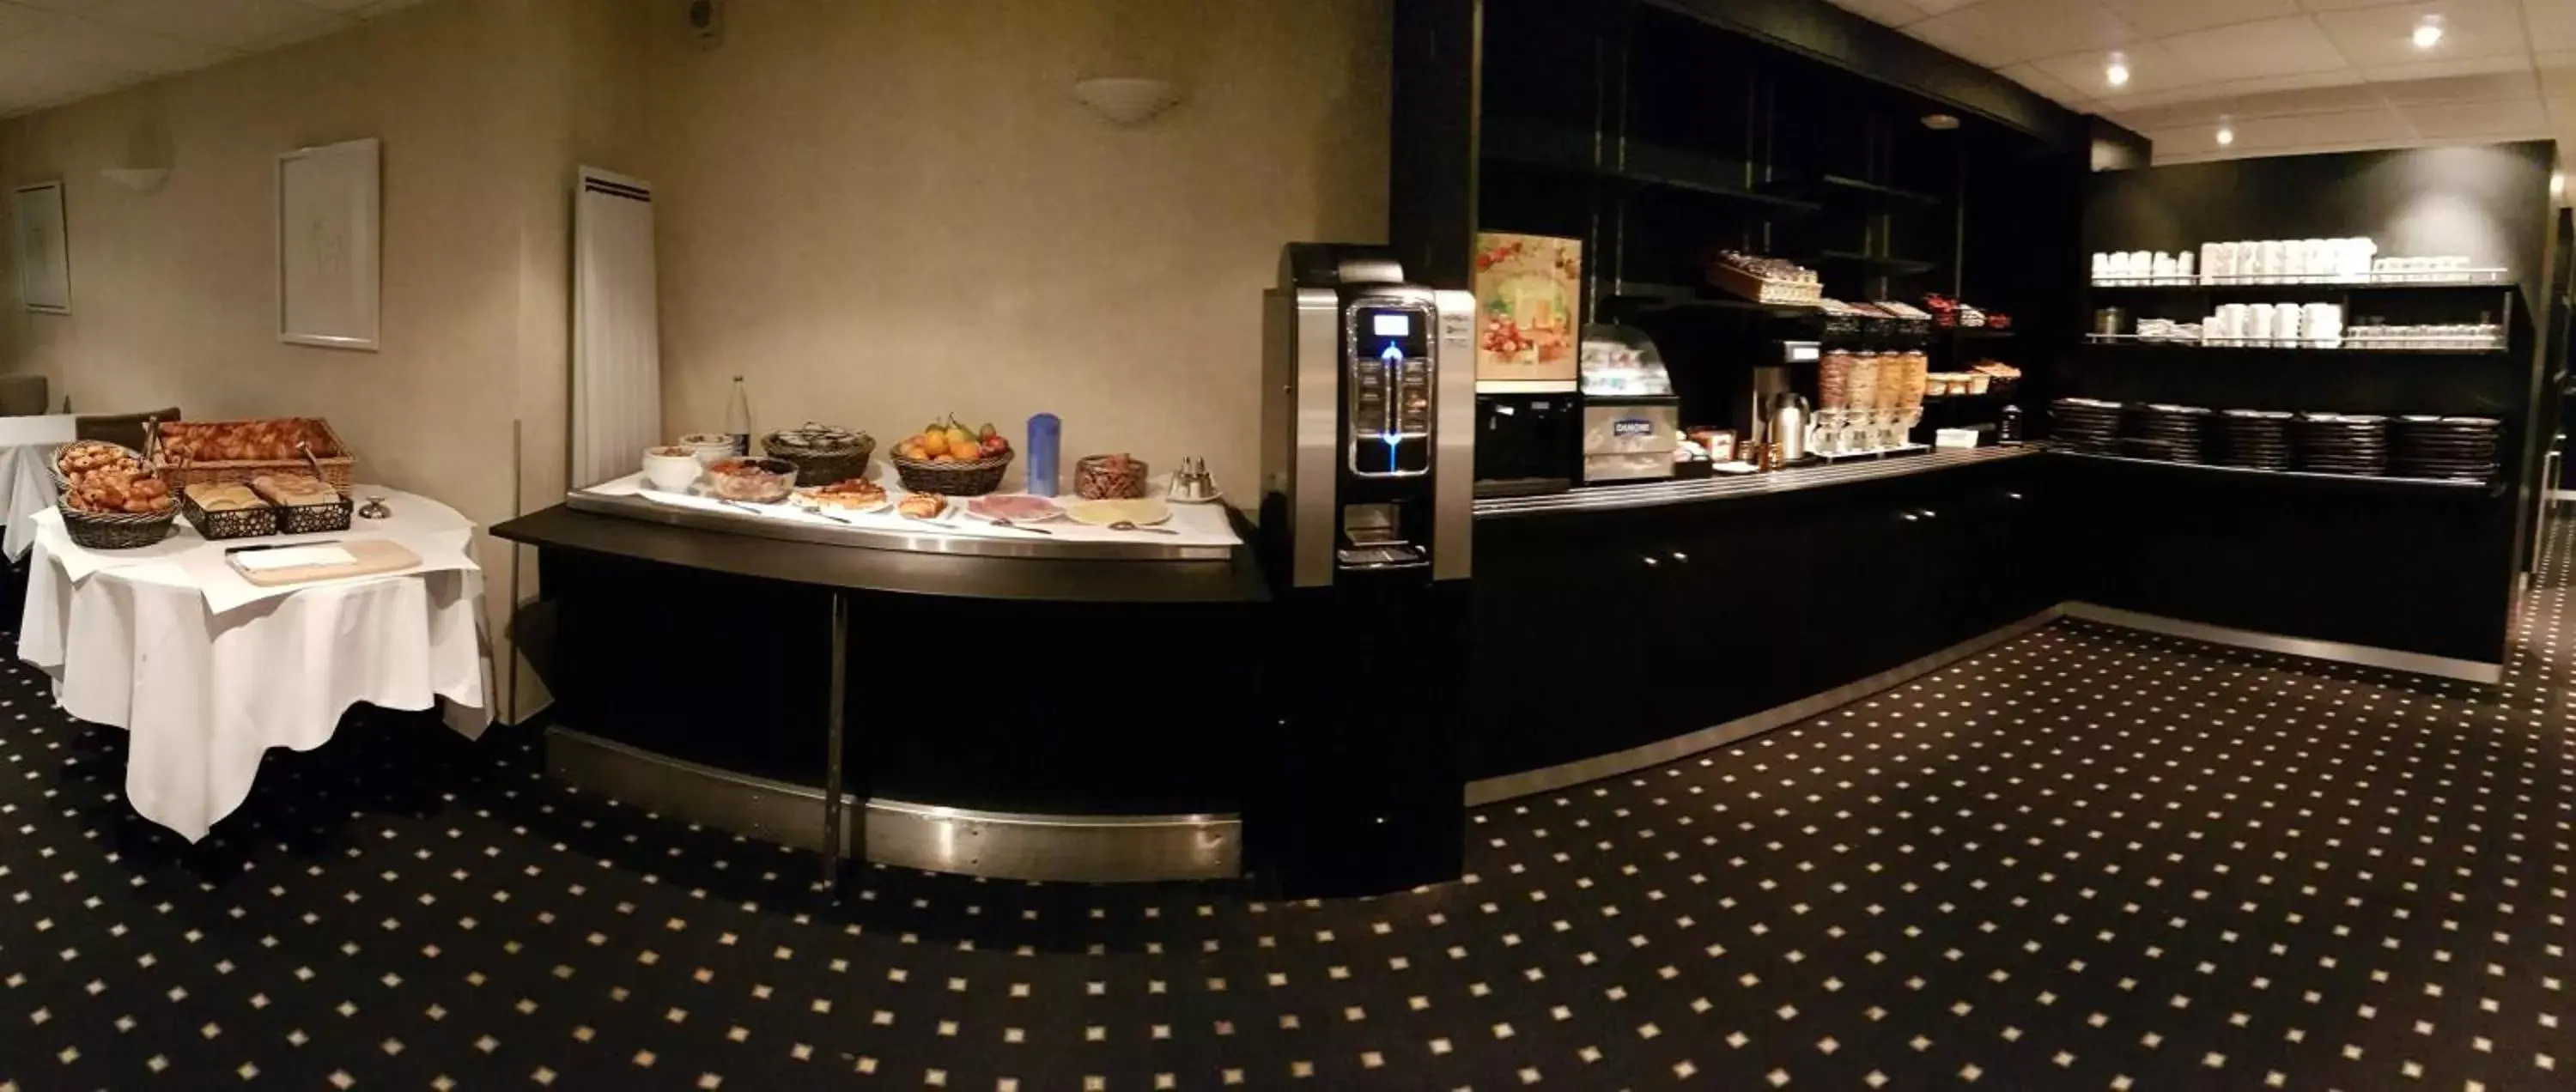 Buffet breakfast, Restaurant/Places to Eat in The Originals City, Hotel Otelinn, Caen (Inter-Hotel)